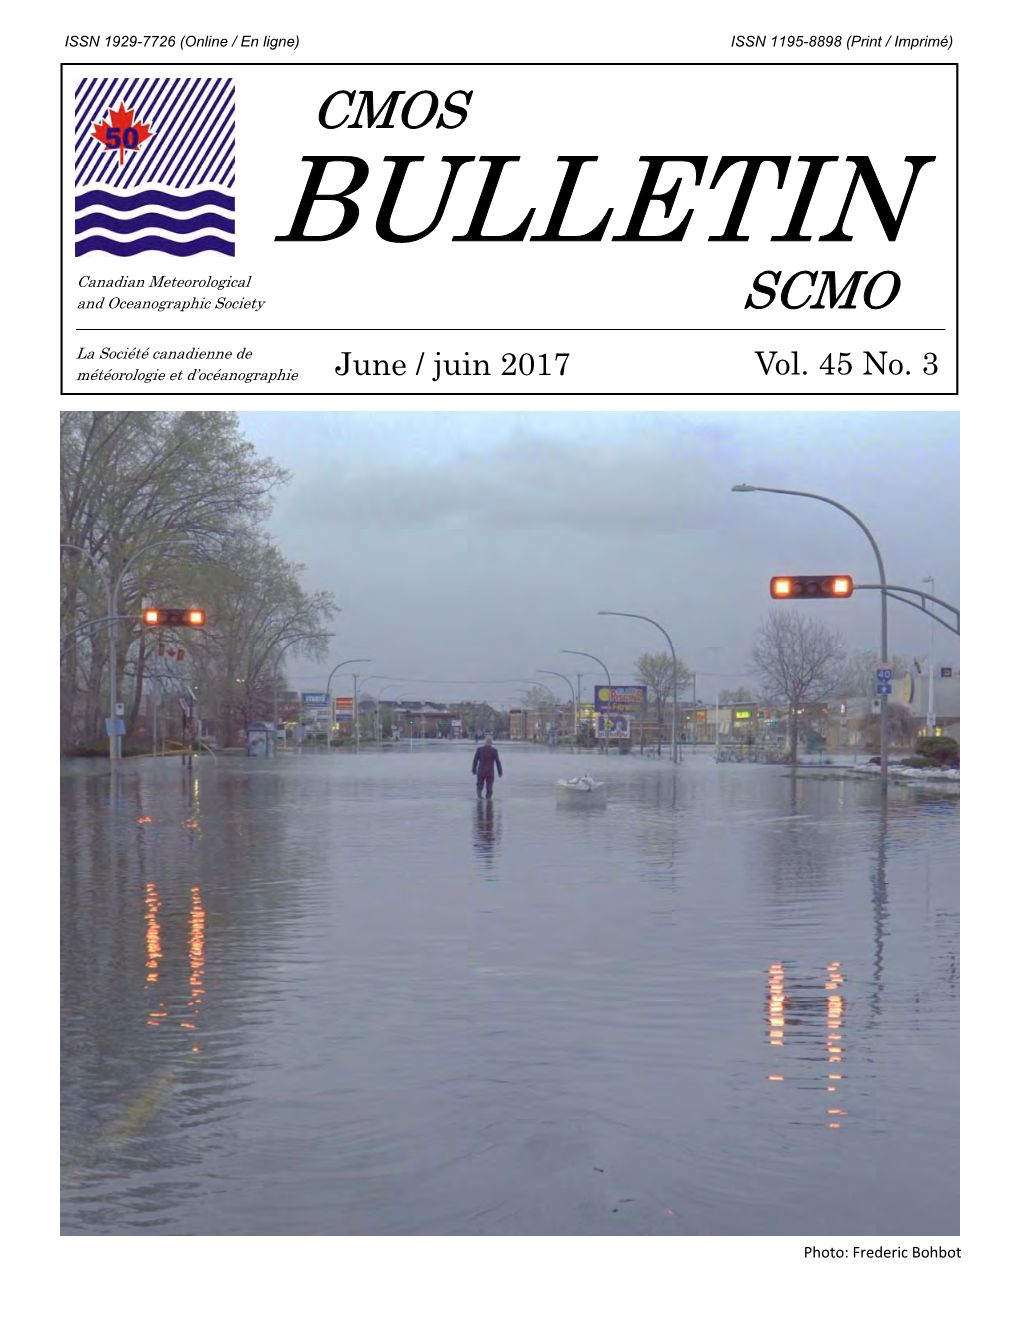 CMOS Bulletin SCMO Volume 45 No. 3 June 2017